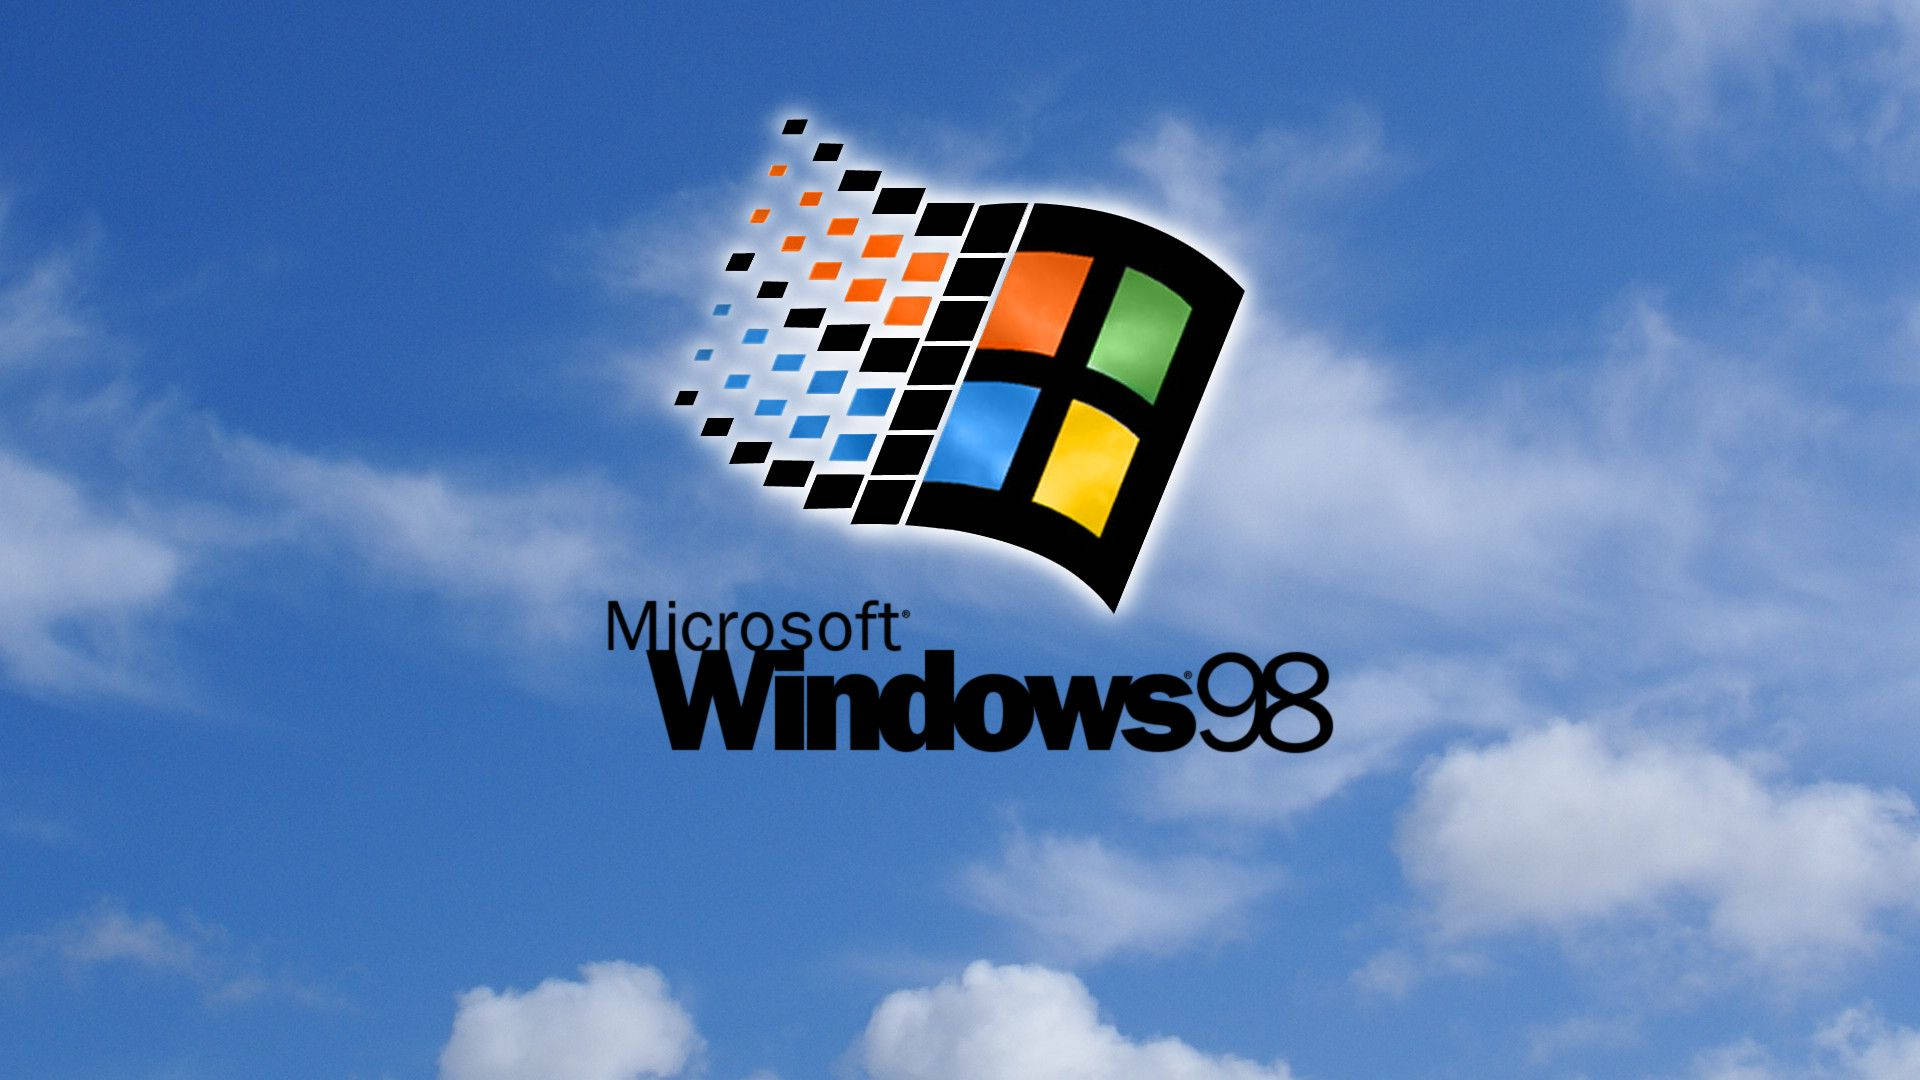 Microsoft Windows 95 Wallpaper